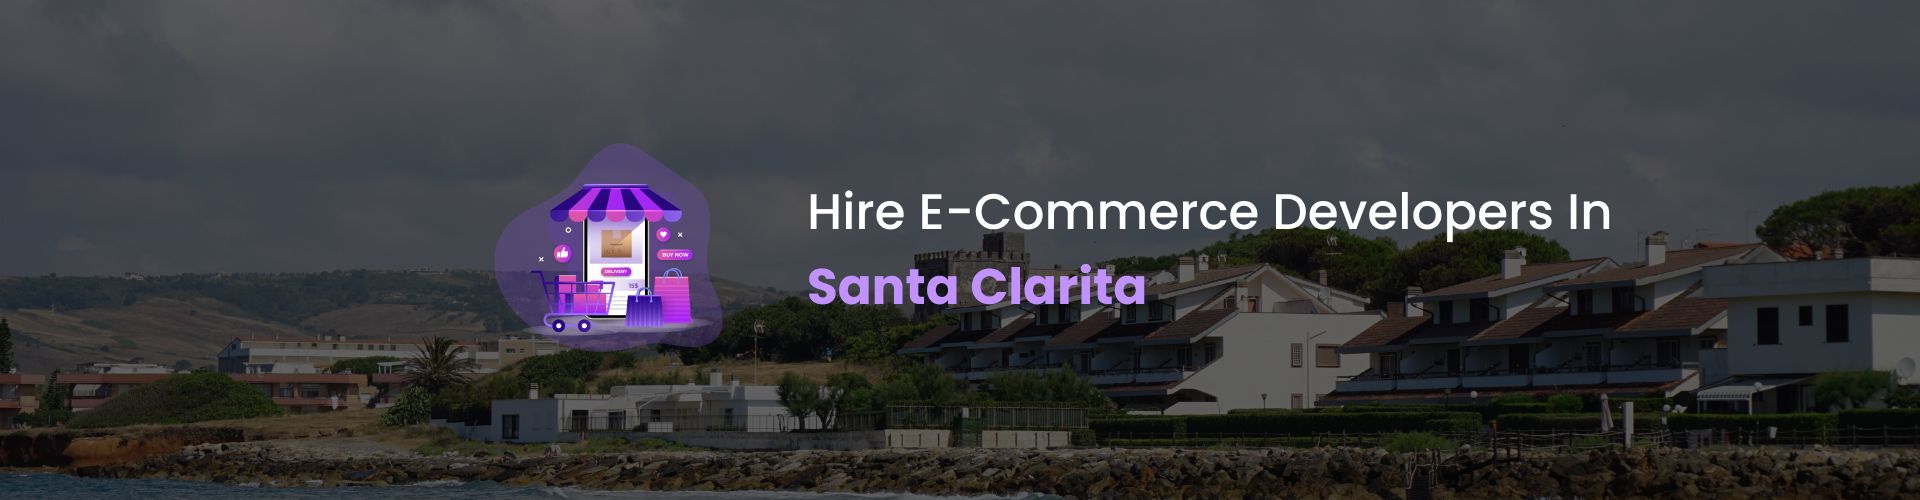 ecommerce development company in santa clarita